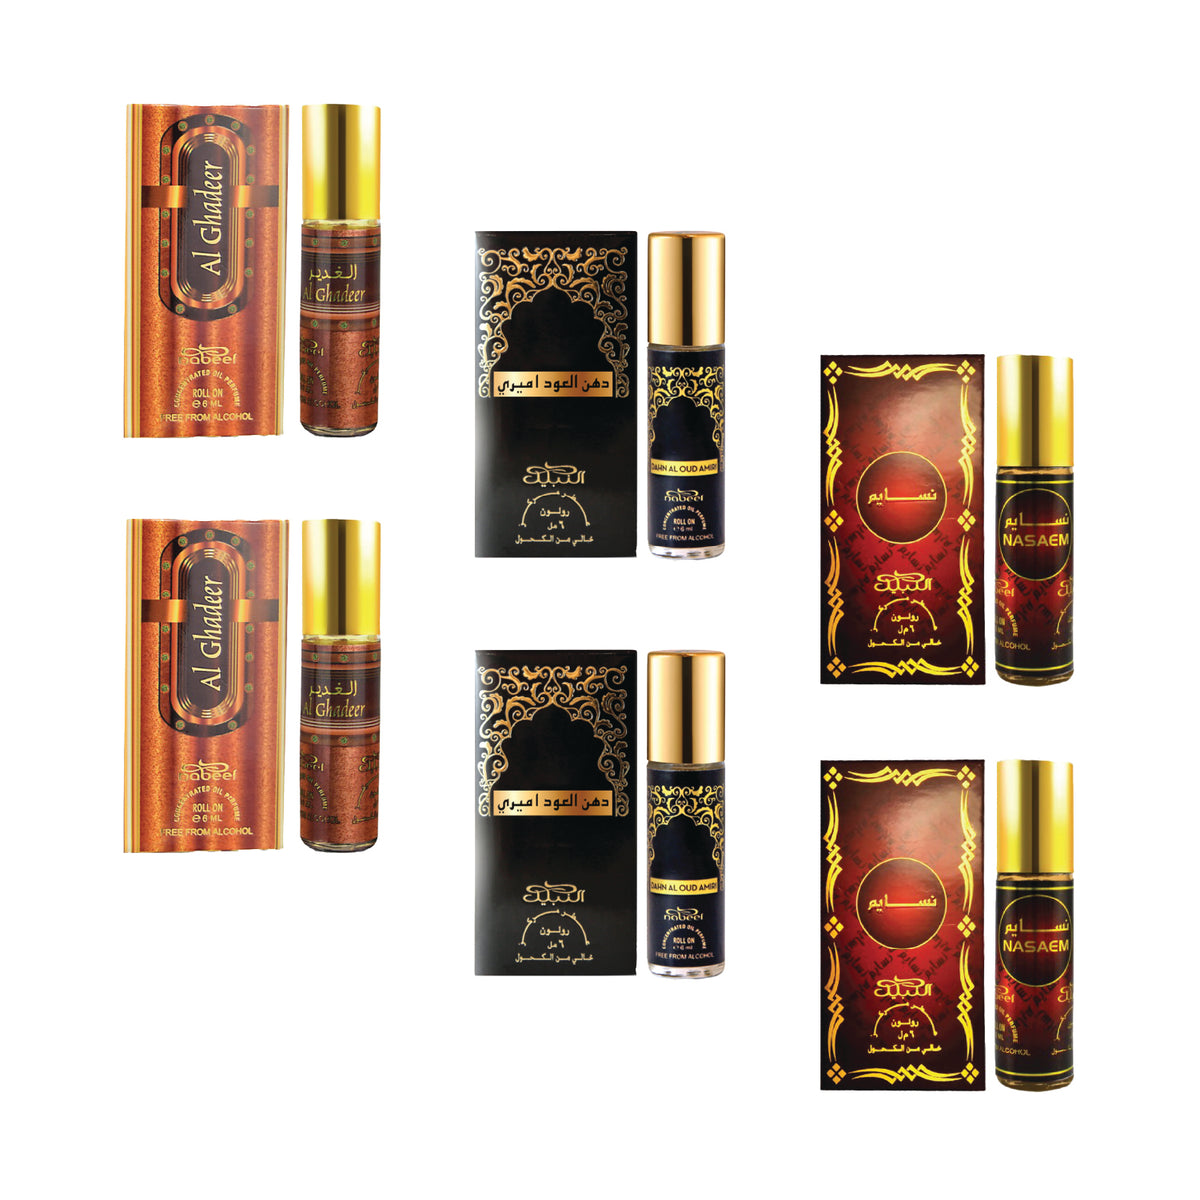 Nabeel - Premium Attar Roll-on Perfume Oil - Collection 19 - Al Ghadeer, Dahn Al Oud Amiri, Nasaem | 100% Non Alcoholic | Gift Set - 6ml (Pack of 6) | Made in U.A.E